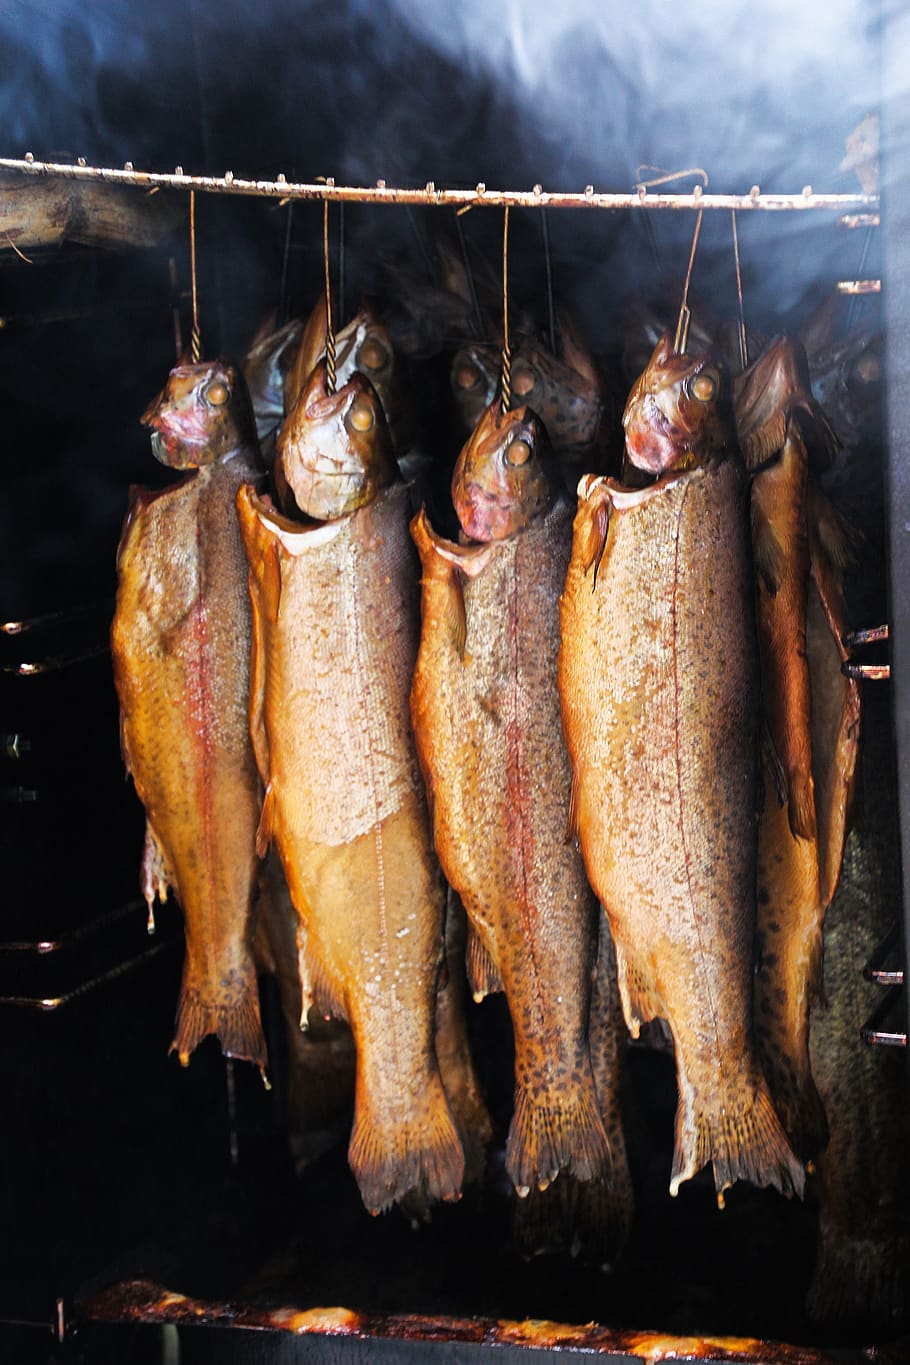 fish, smoked fish, smoked, fishing, smoking, delicacies, smoked trout, smokehouse, smoking oven, smoke